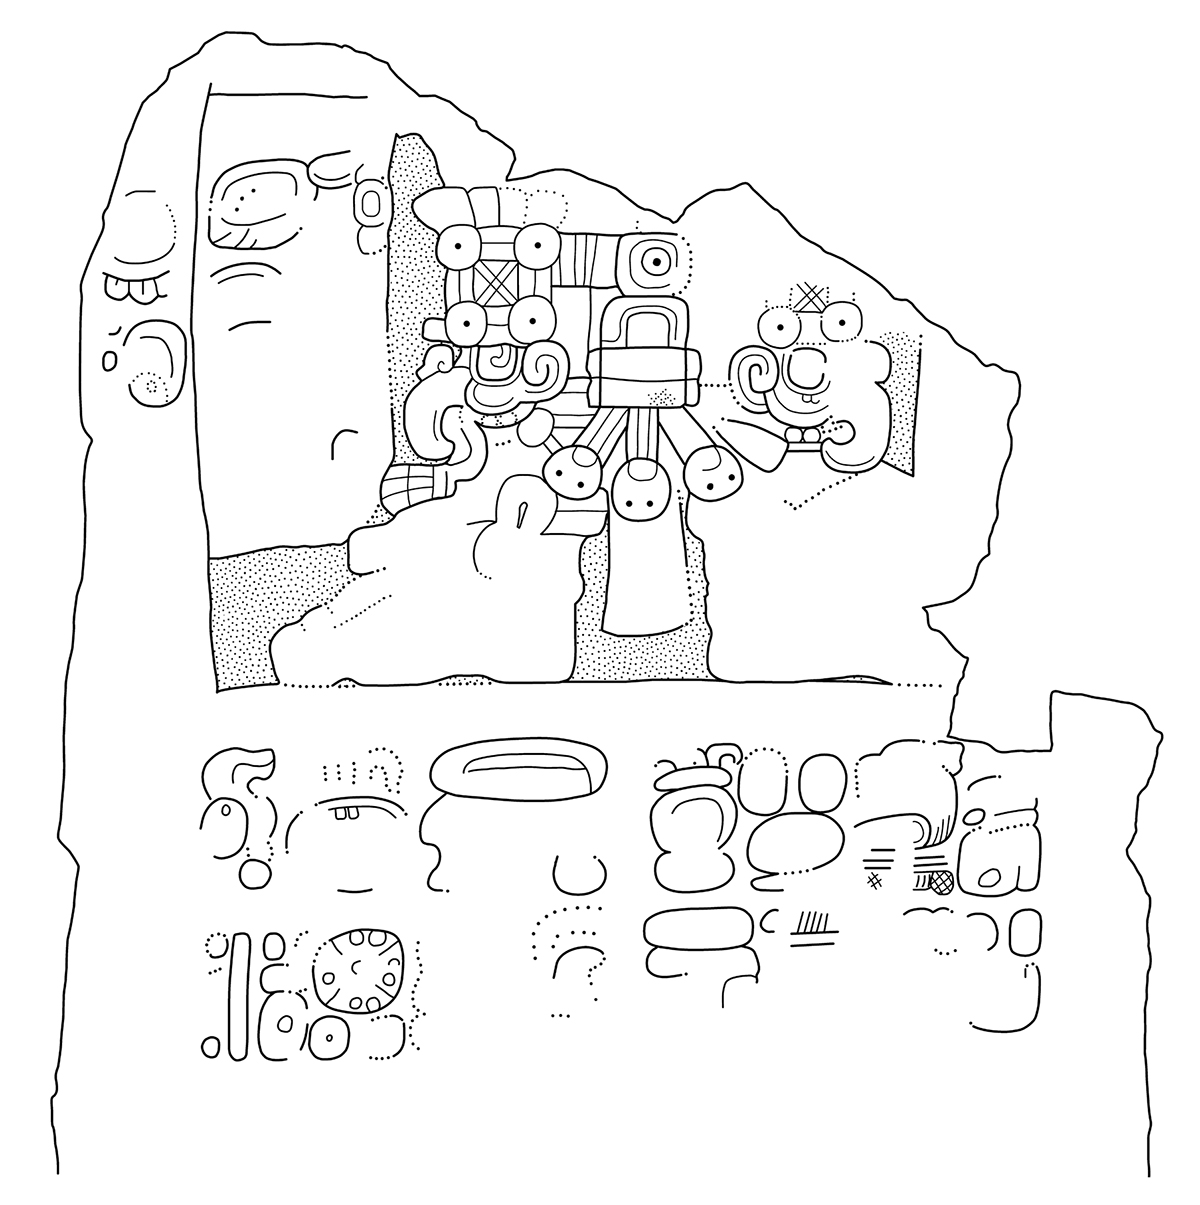 Drawing of mayan glyph